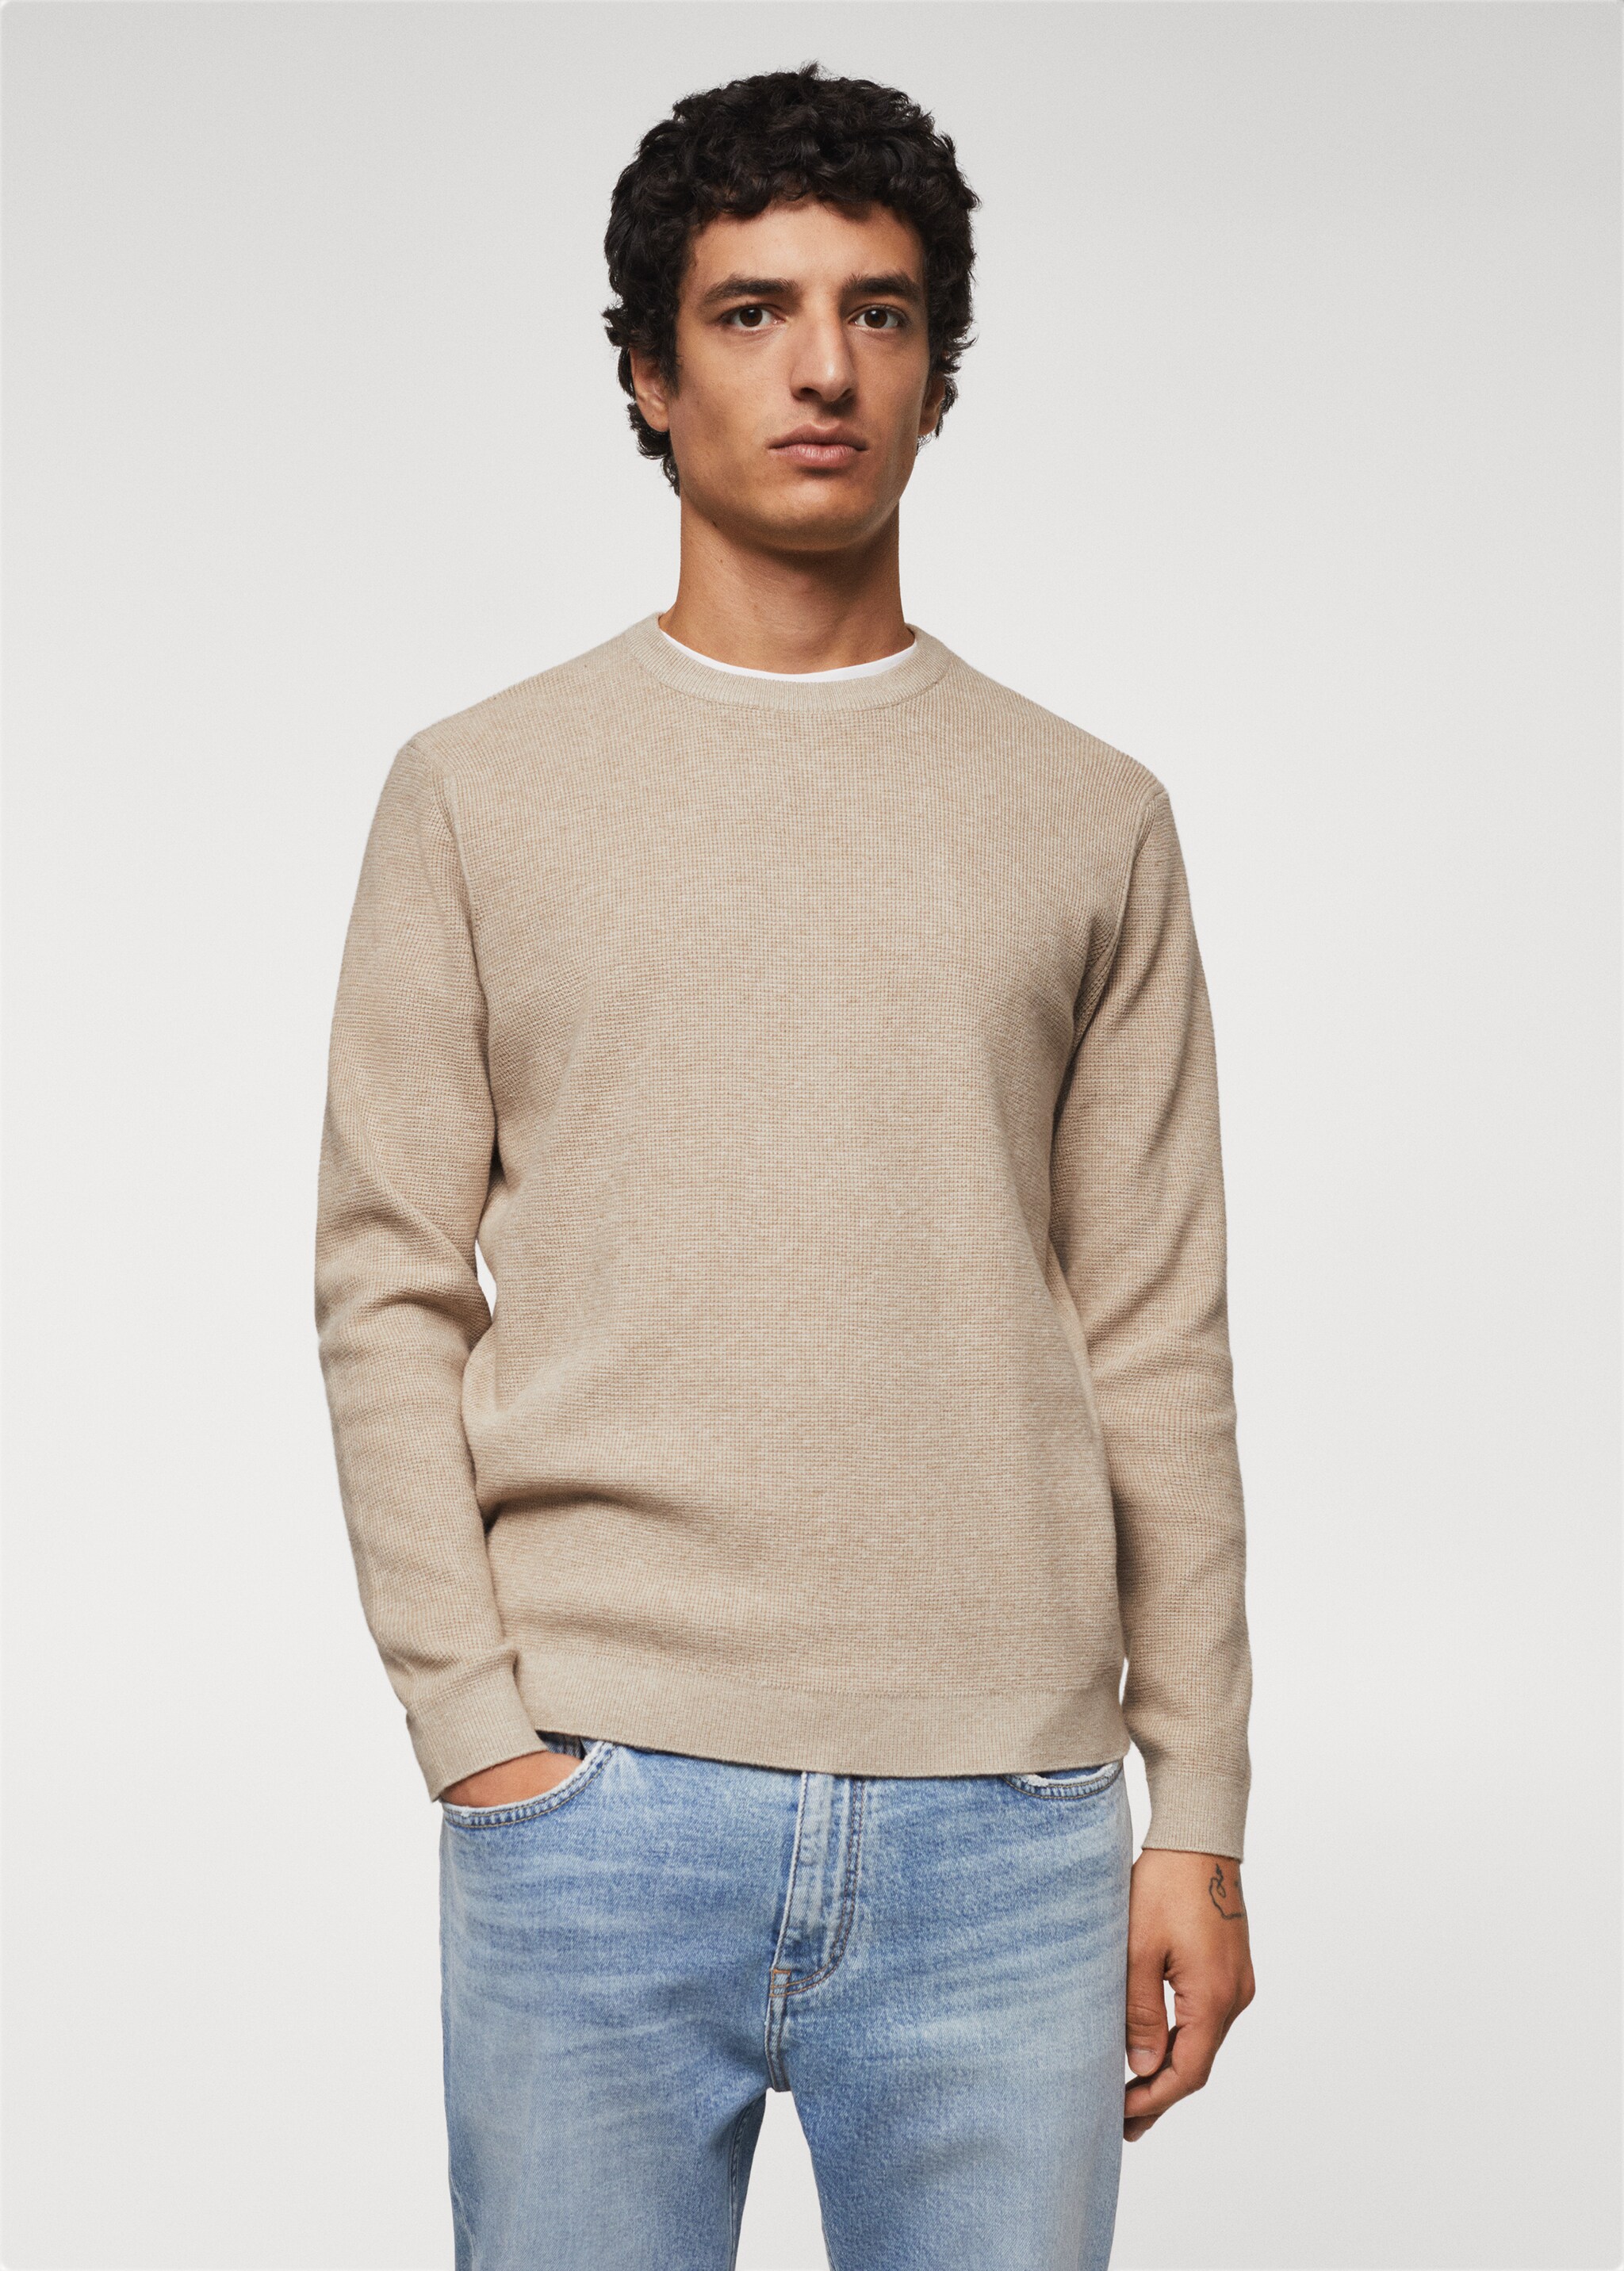 Structured cotton sweater - Medium plane